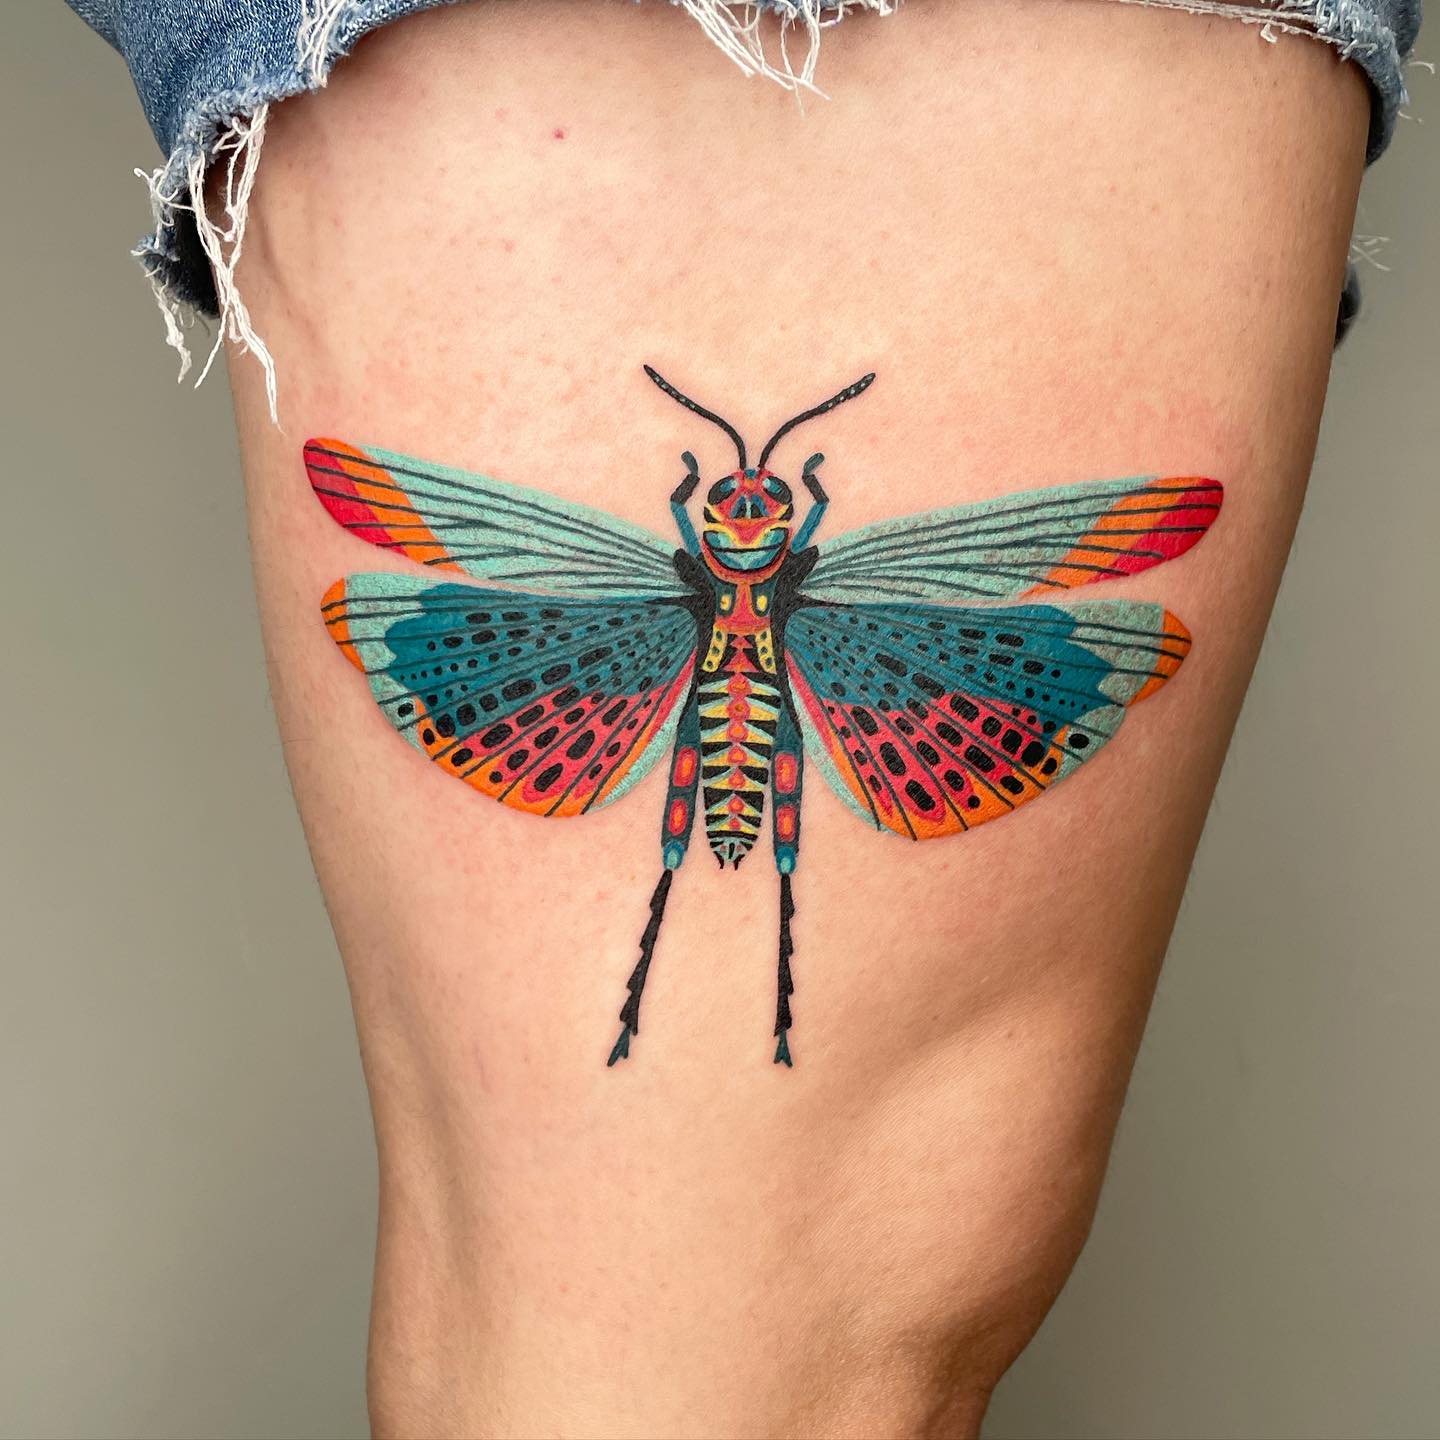 Grasshopper tattoo by laurenblairart